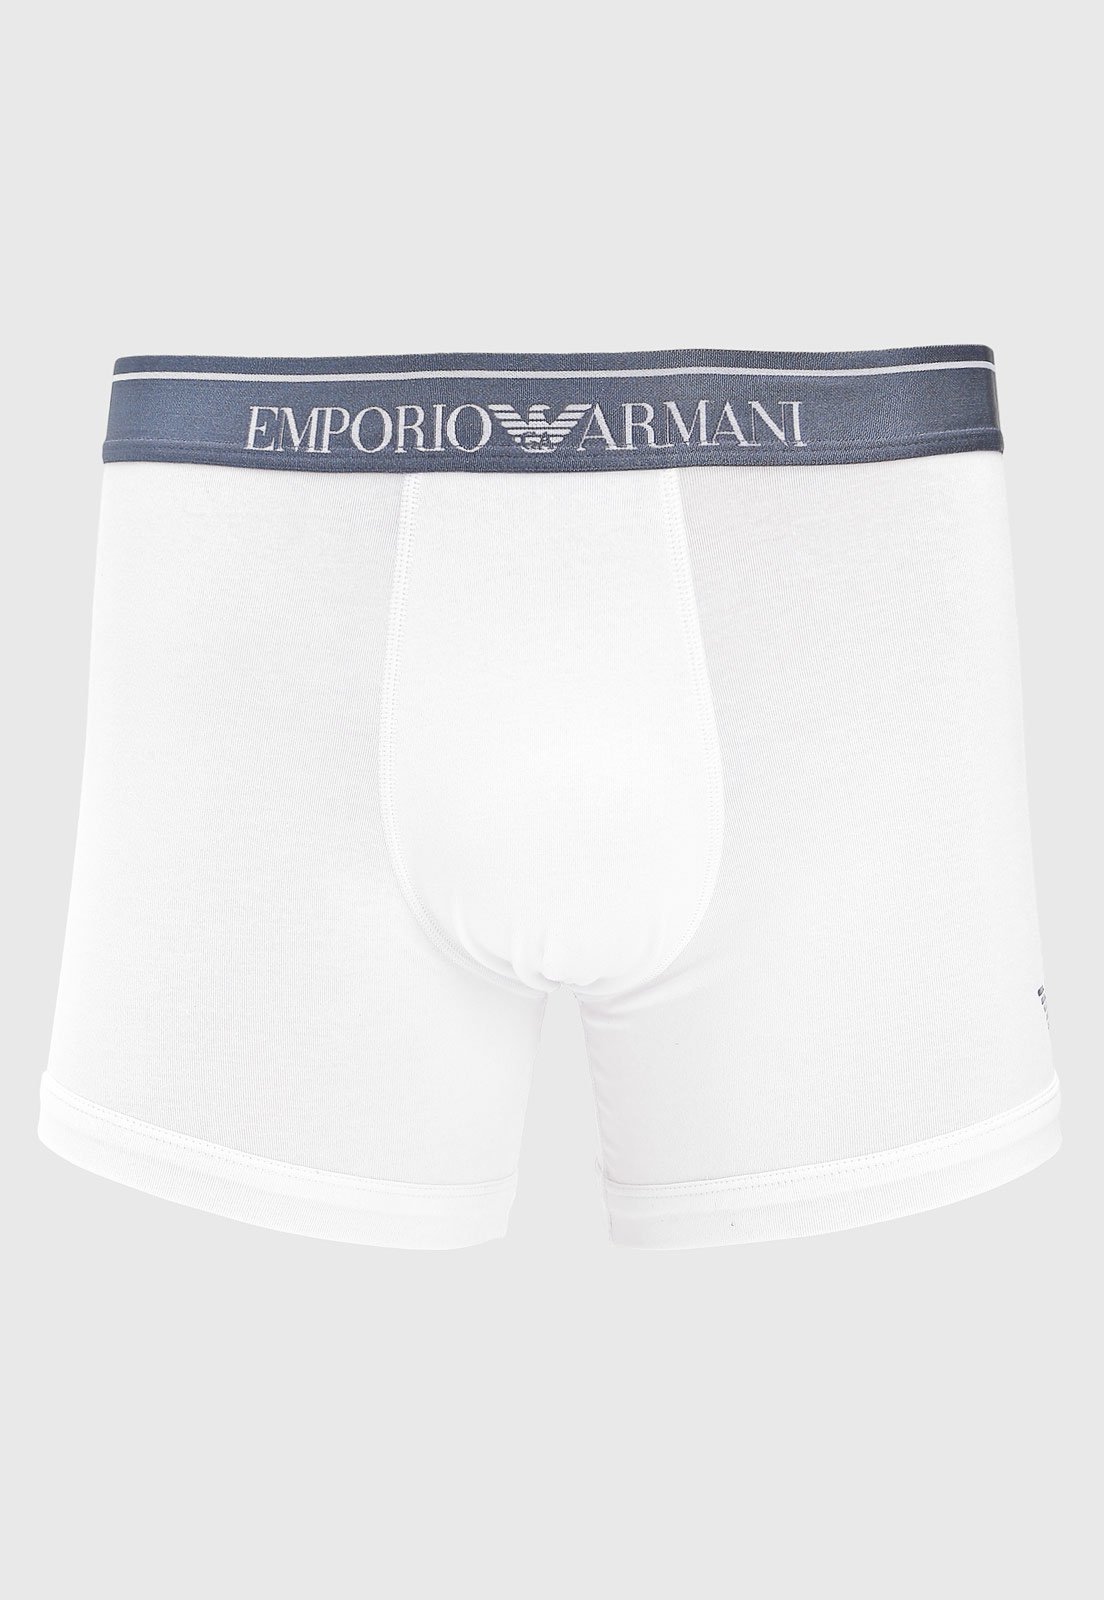 https://static.dafiti.com.br/p/Emporio-Armani-Underwear-Cueca-Emporio-Armani-Underwear-Boxer-Logo-Branca-6156-93467821-1-zoom.jpg